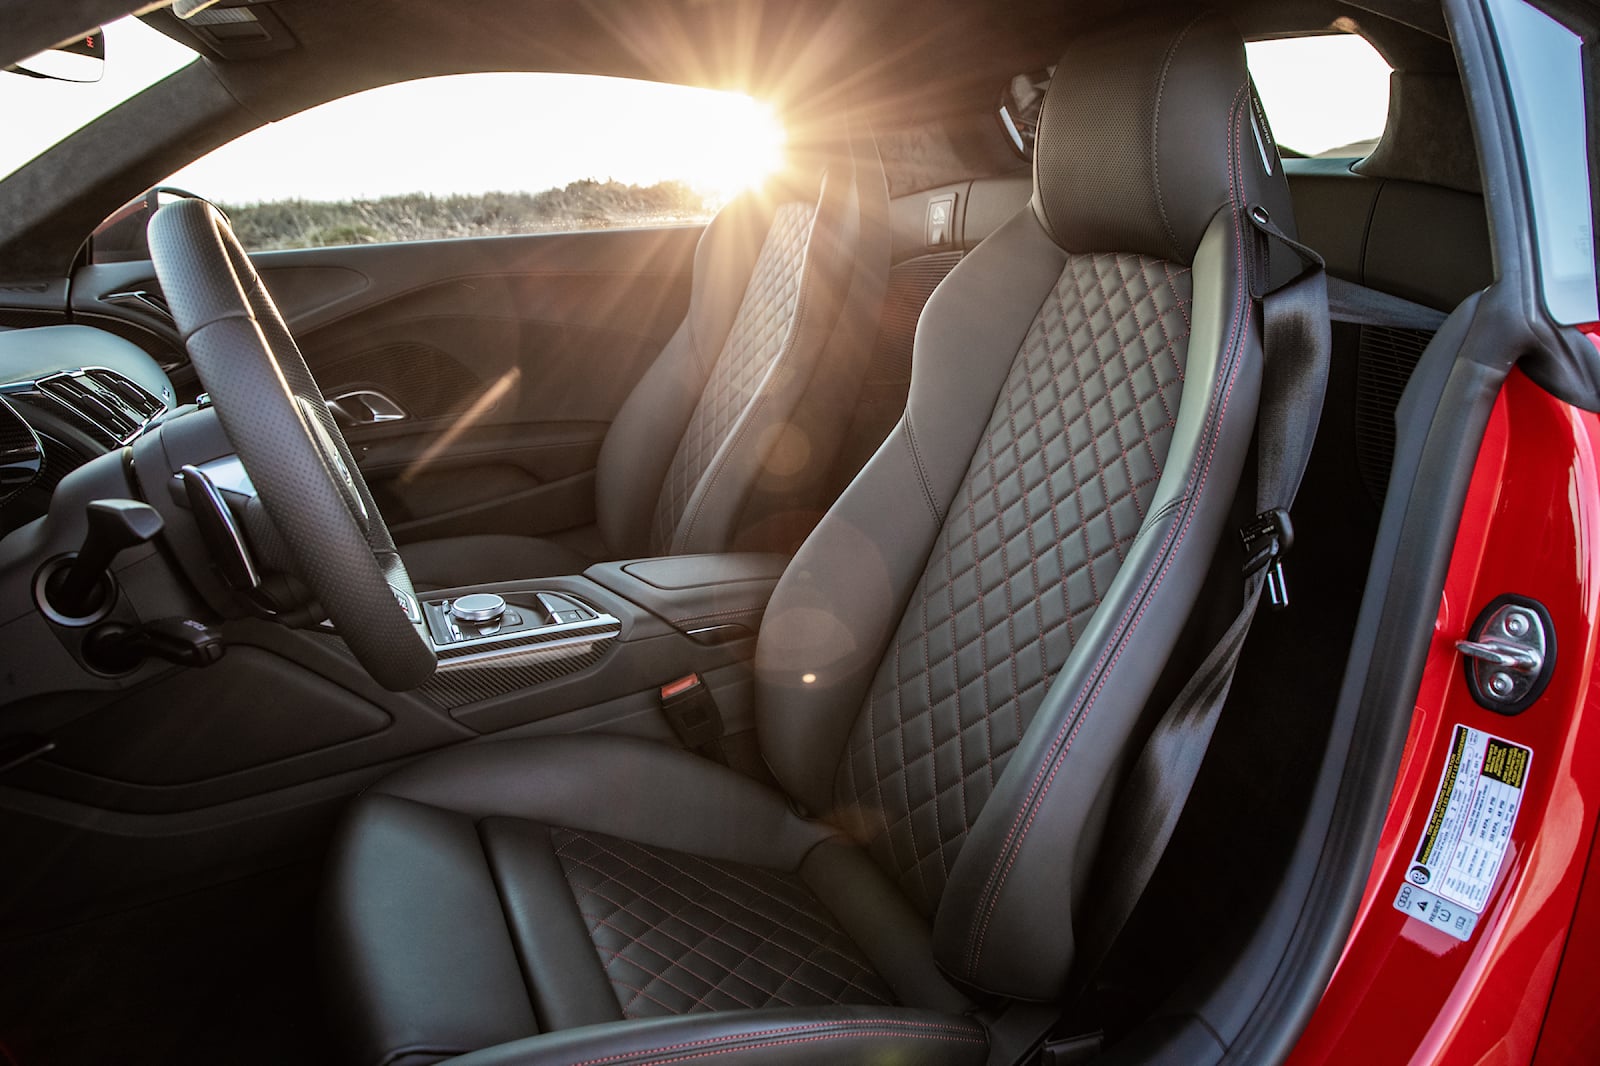 Audi R8 V12 TDI Concept Interior - Car Body Design